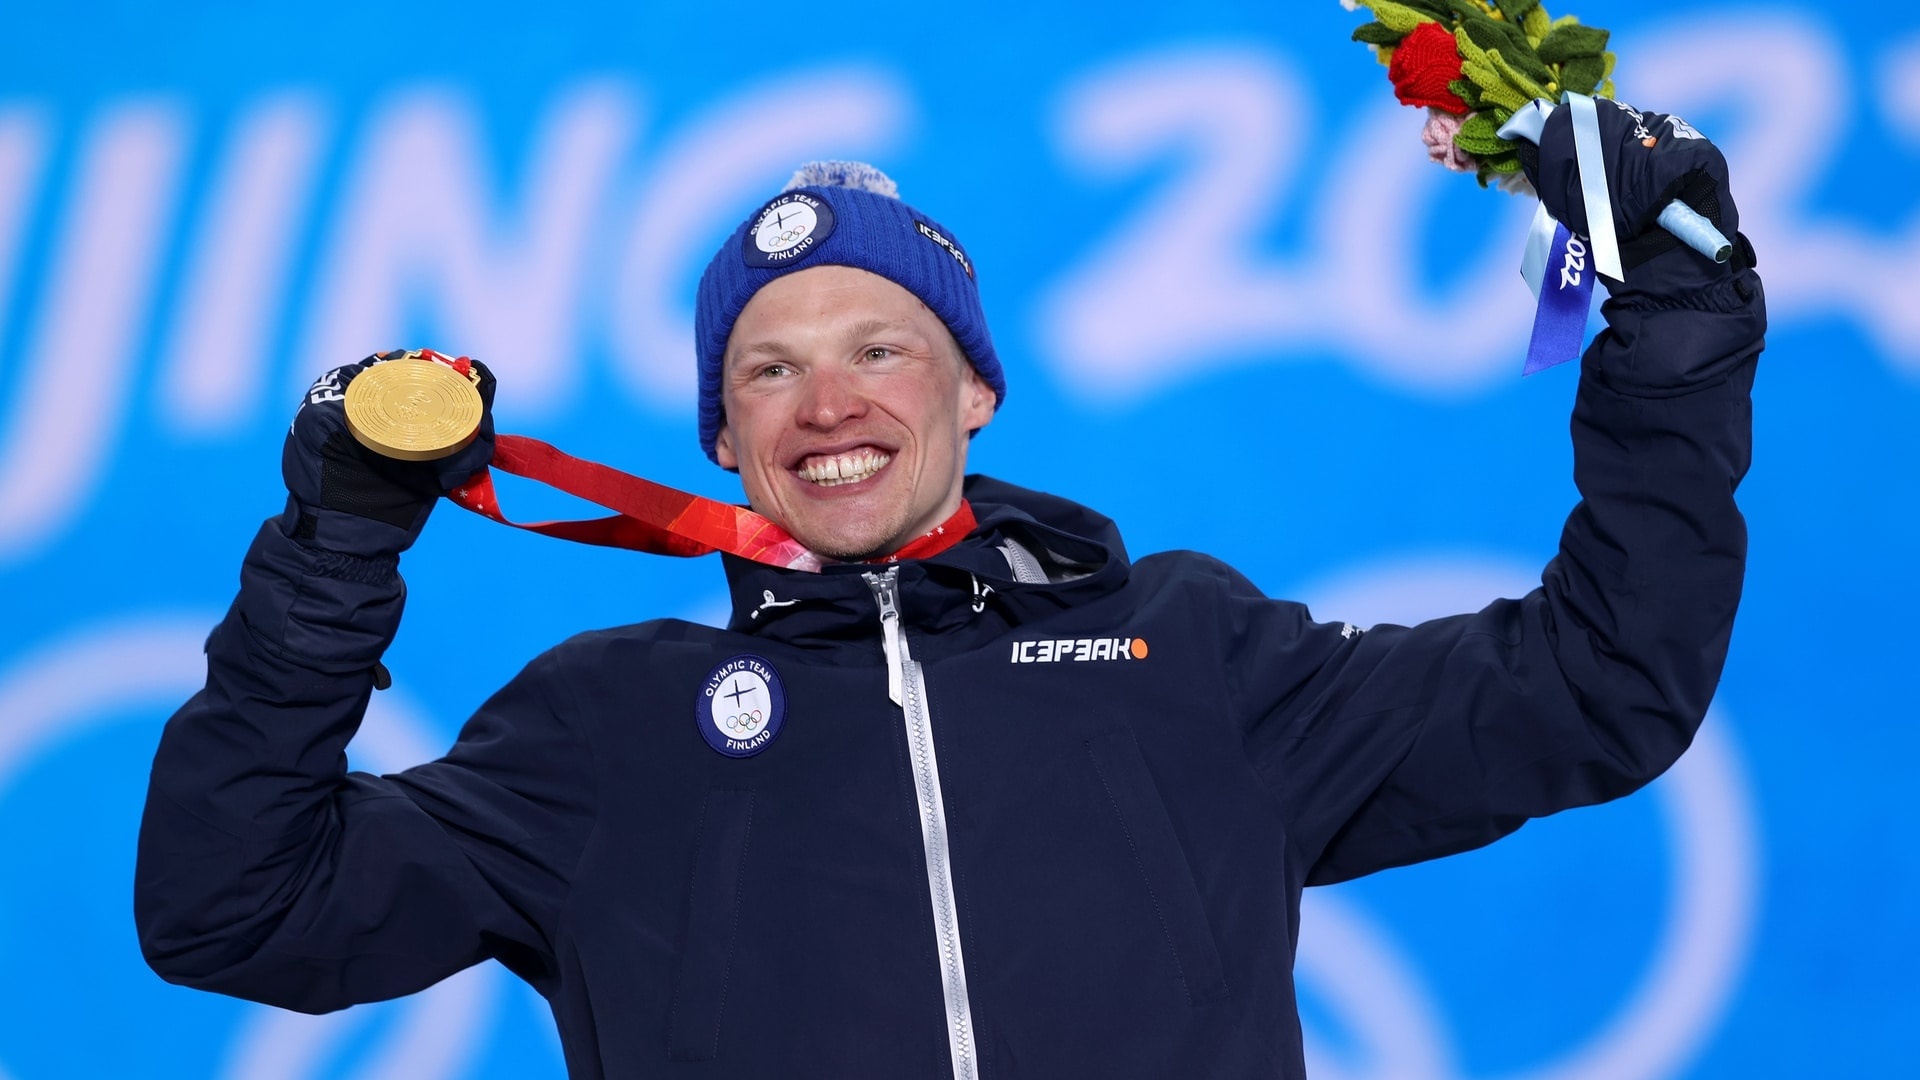 Mass start champion, Iivo Niskanen, Gold medal joy, Winter Olympics, 1920x1080 Full HD Desktop